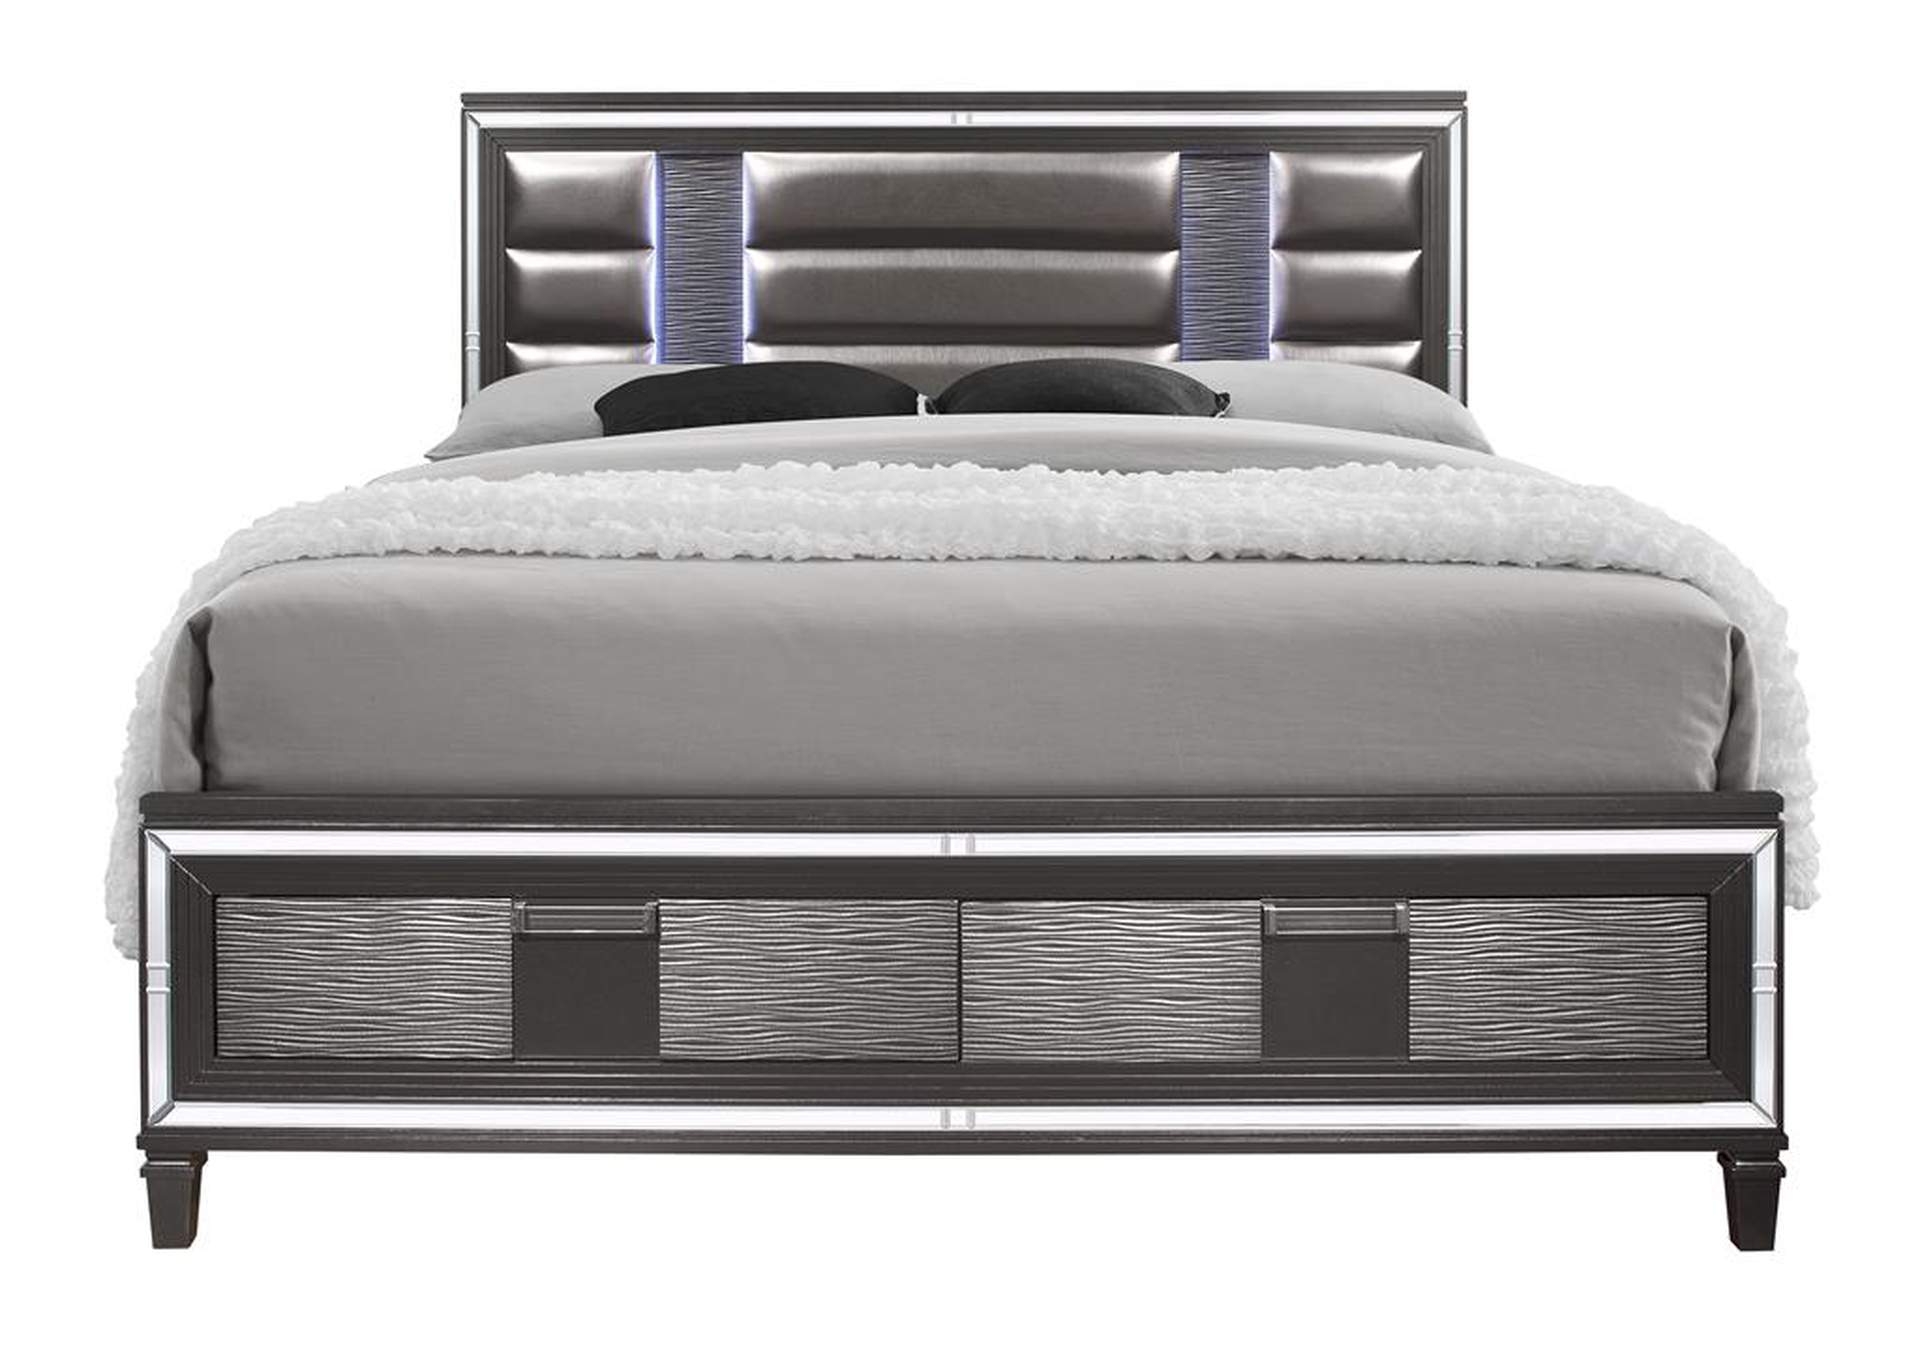 Metallic Grey Pisa Full Bed,Global Furniture USA